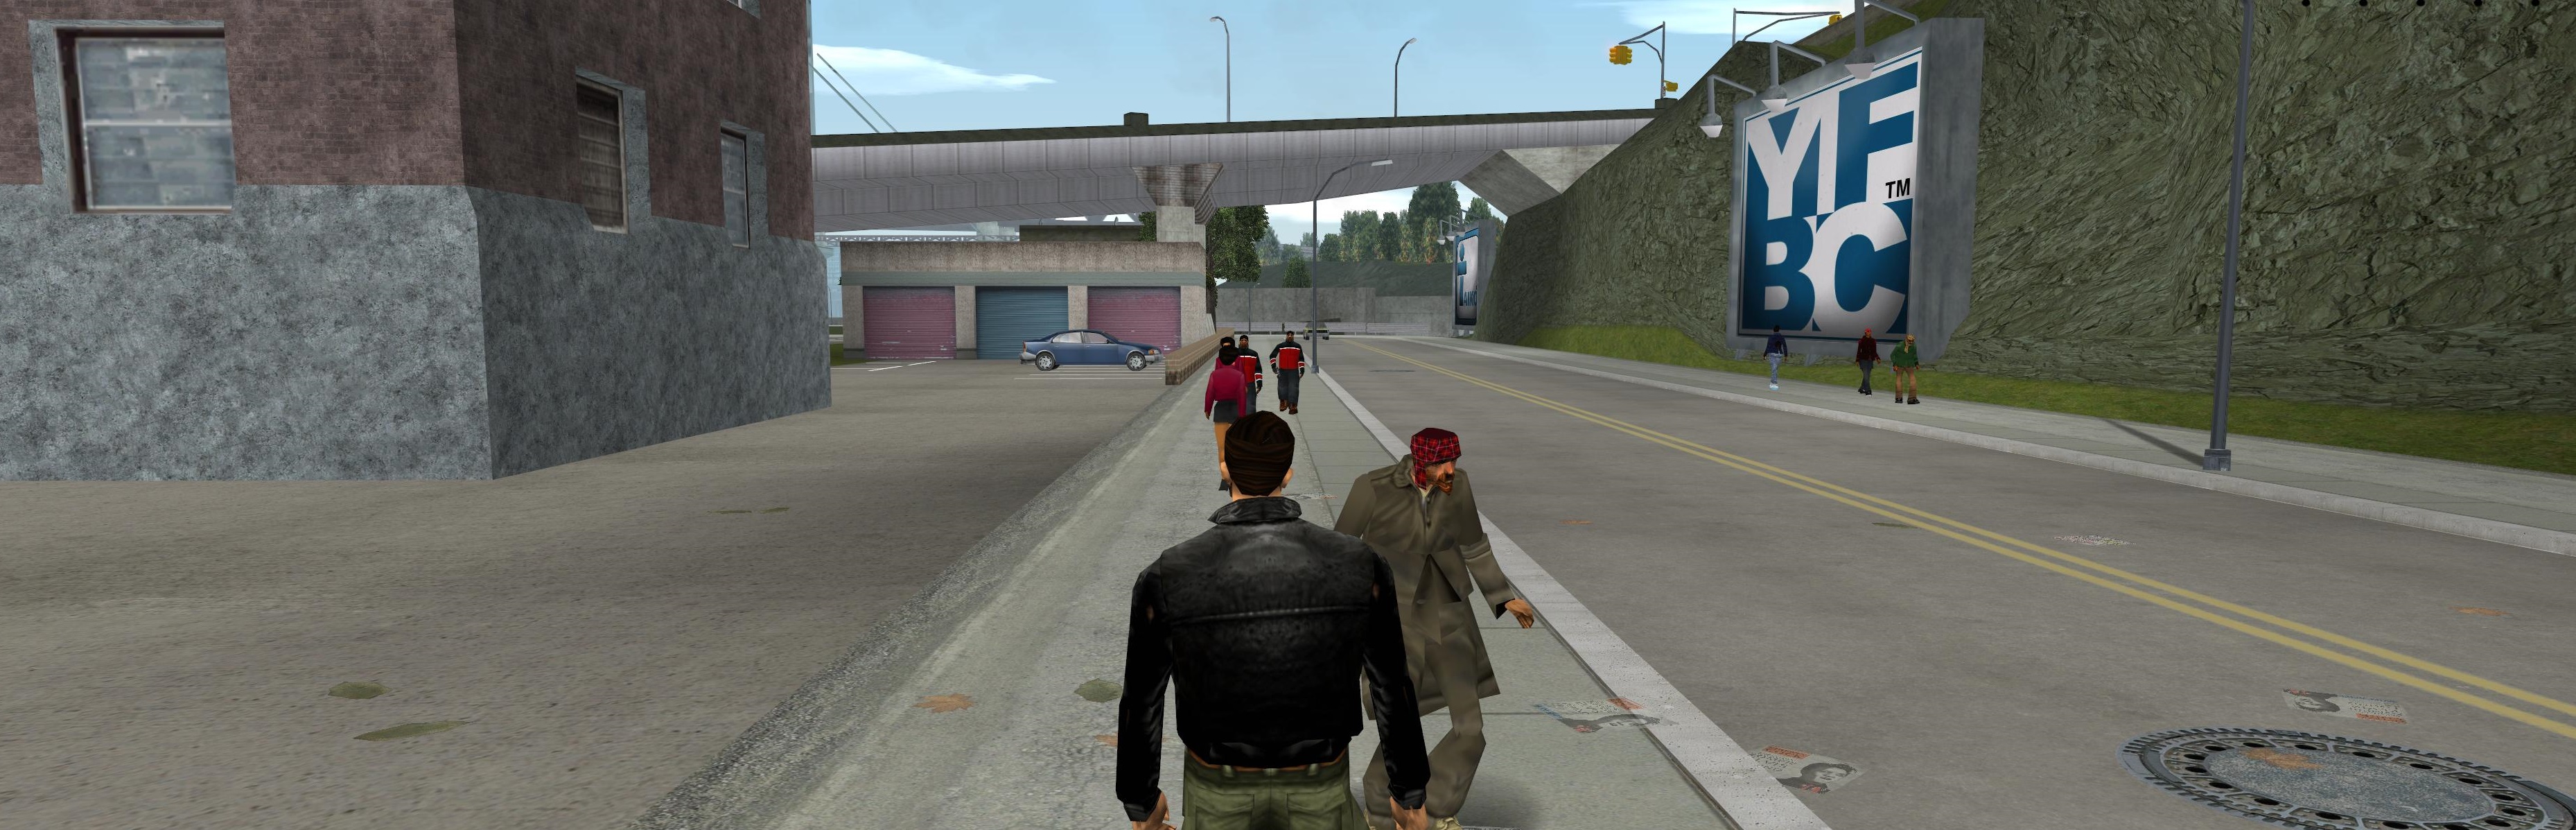 GTA III - Saved Game complete (Mod) for Grand Theft Auto III 